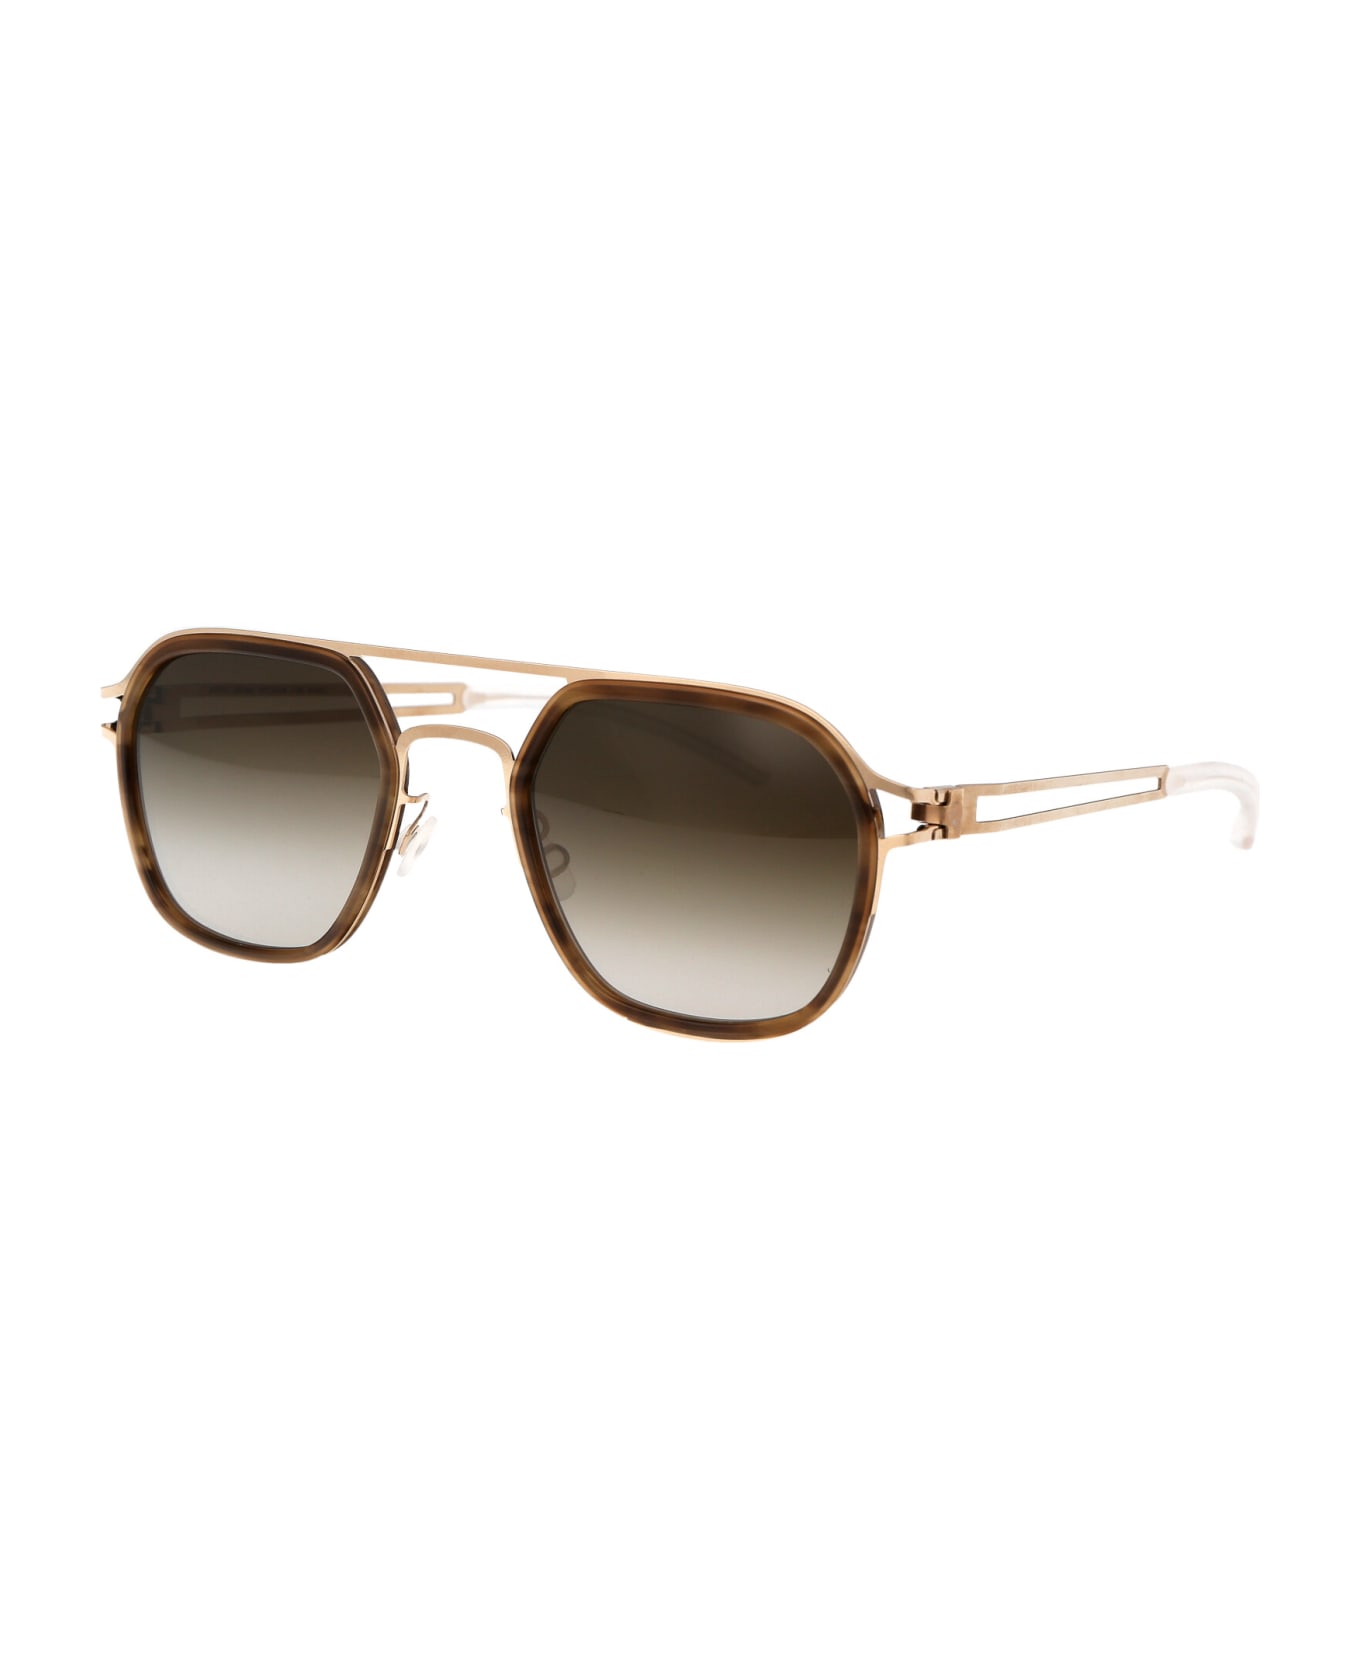 Mykita Leeland Sunglasses - 796 A80 Champagne Gold/Galapagos Raw Brown Gradient